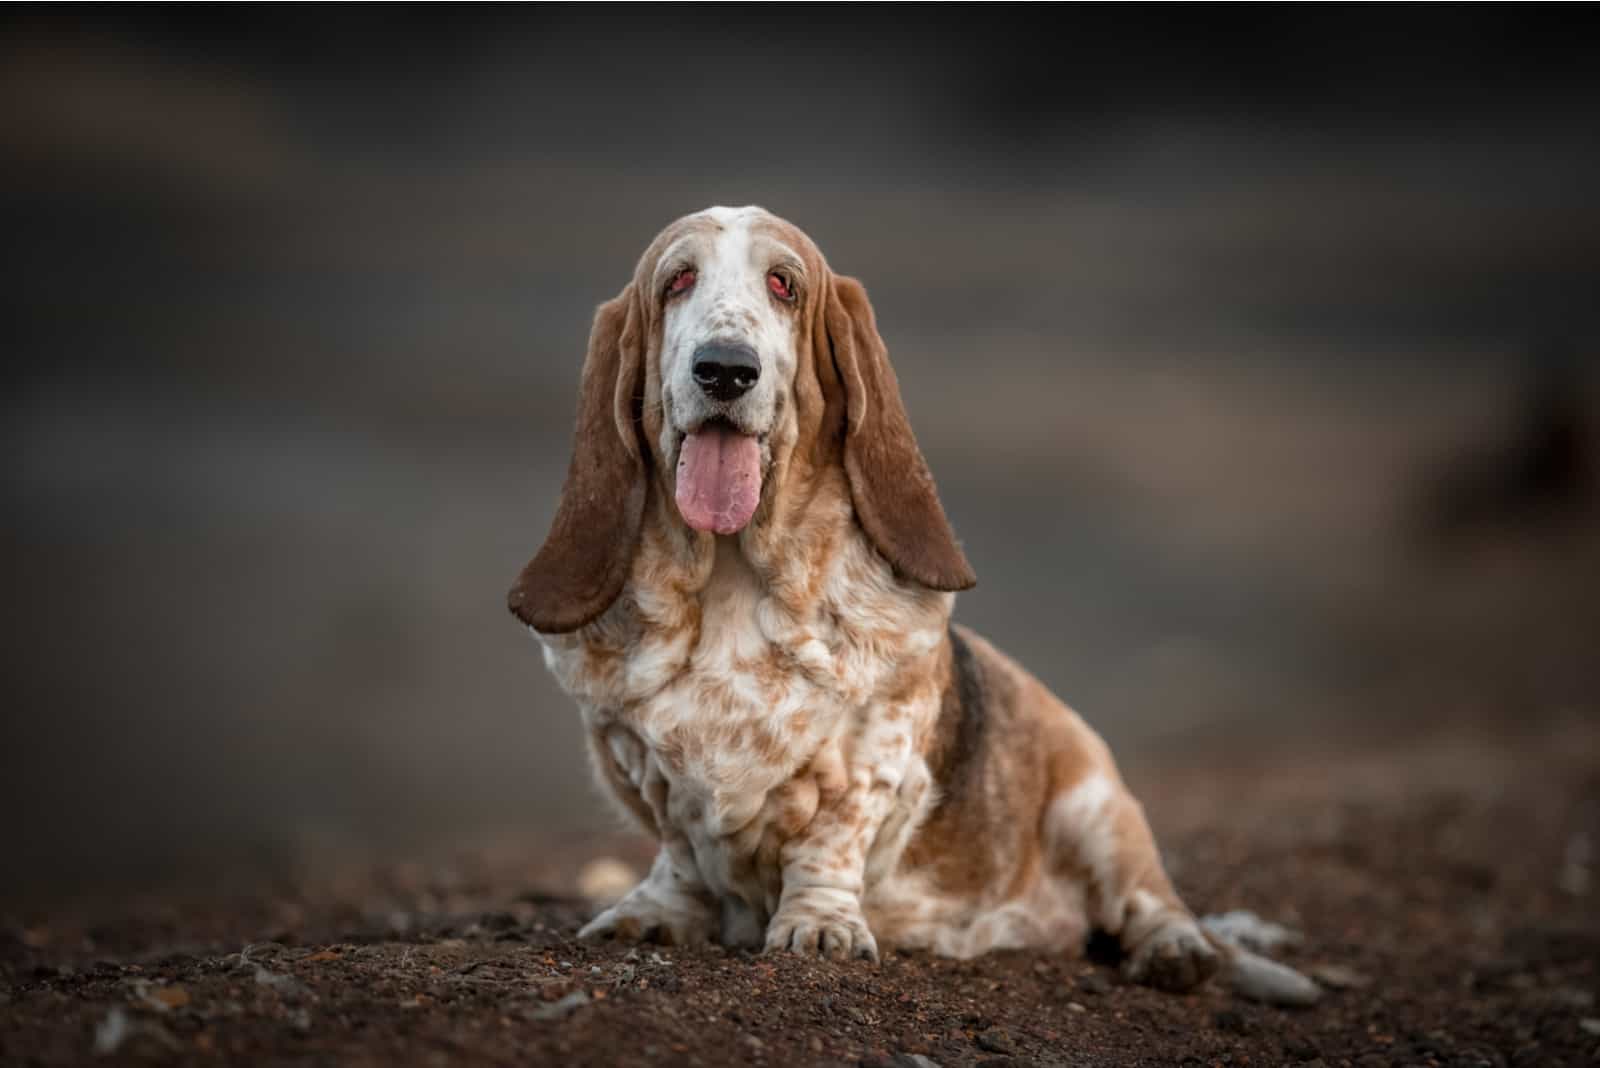 beautiful Basset hound outdoors